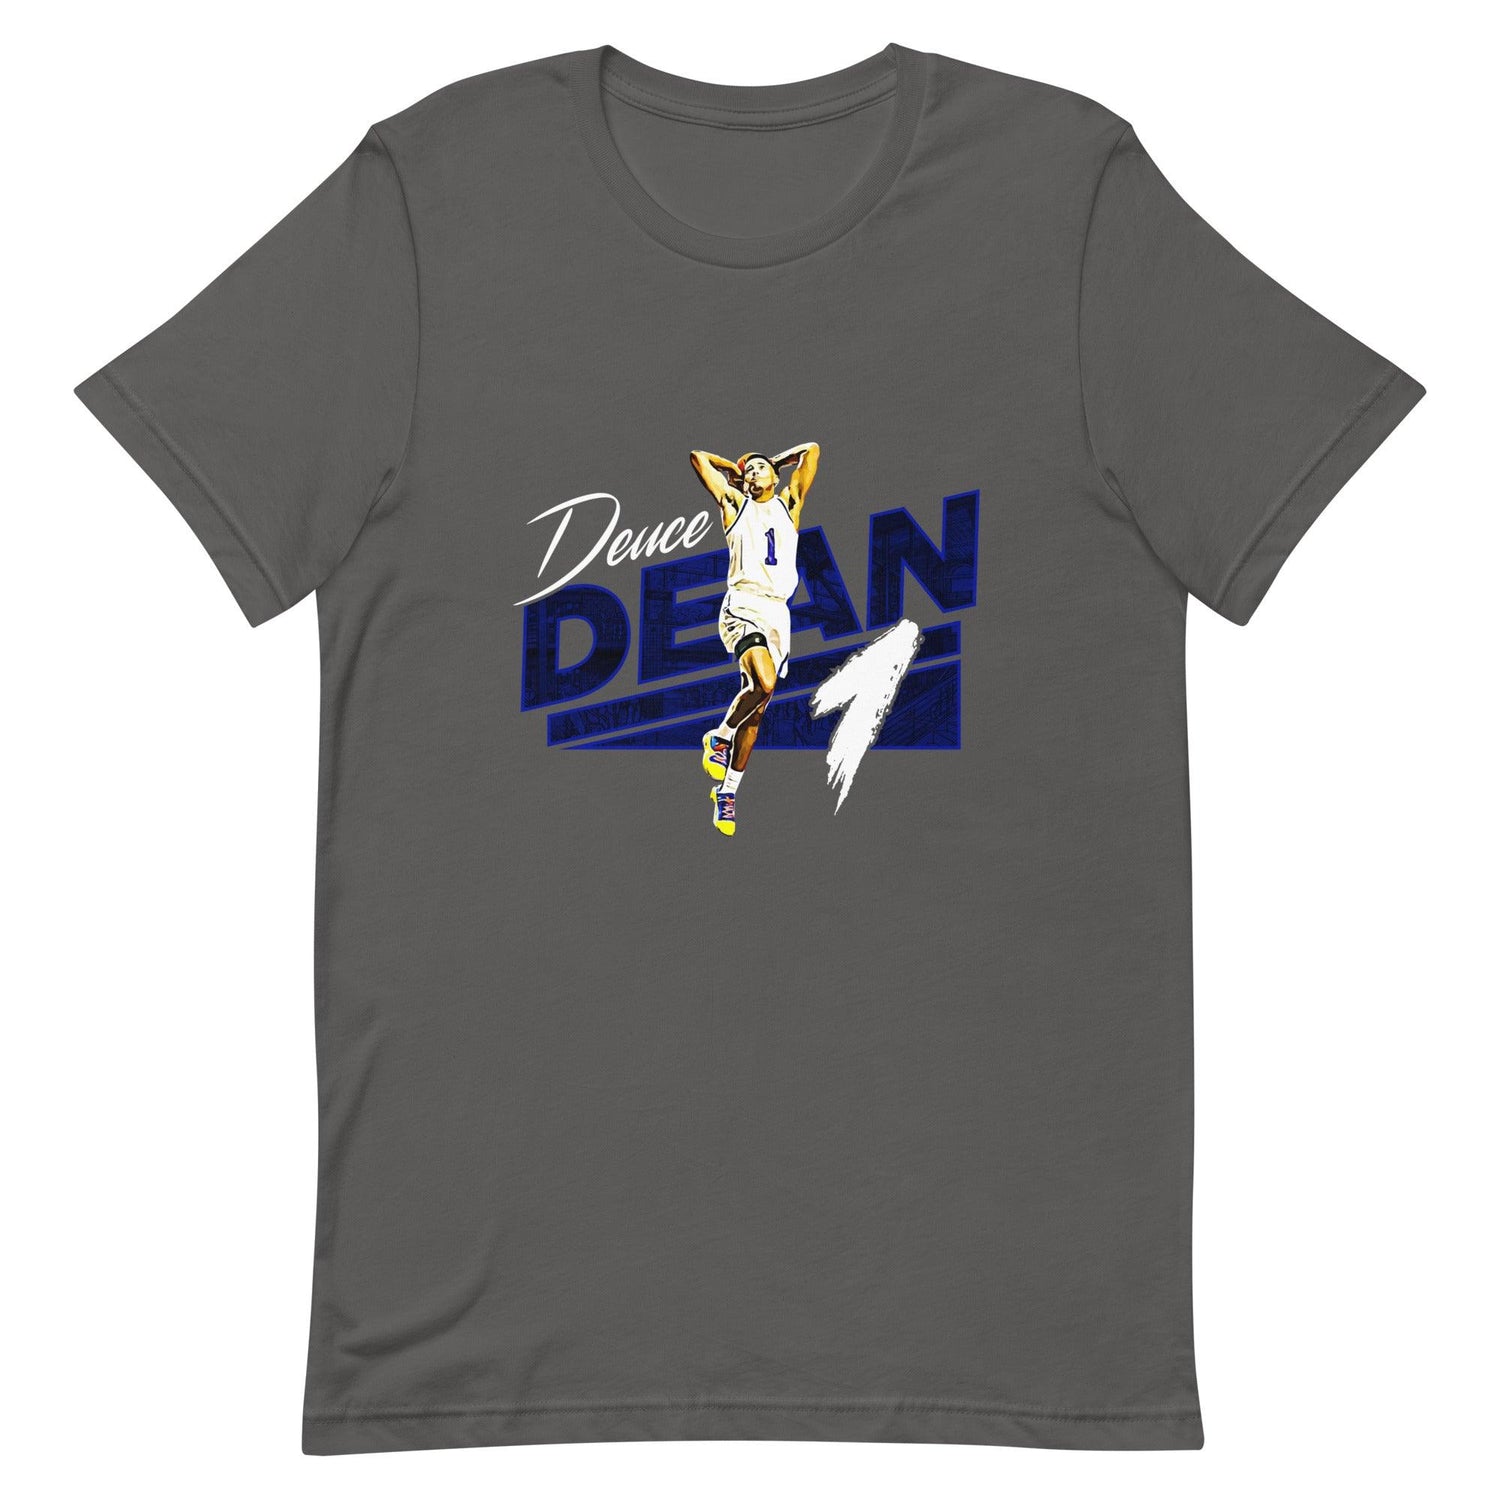 Deuce Dean “Essential” t-shirt - Fan Arch